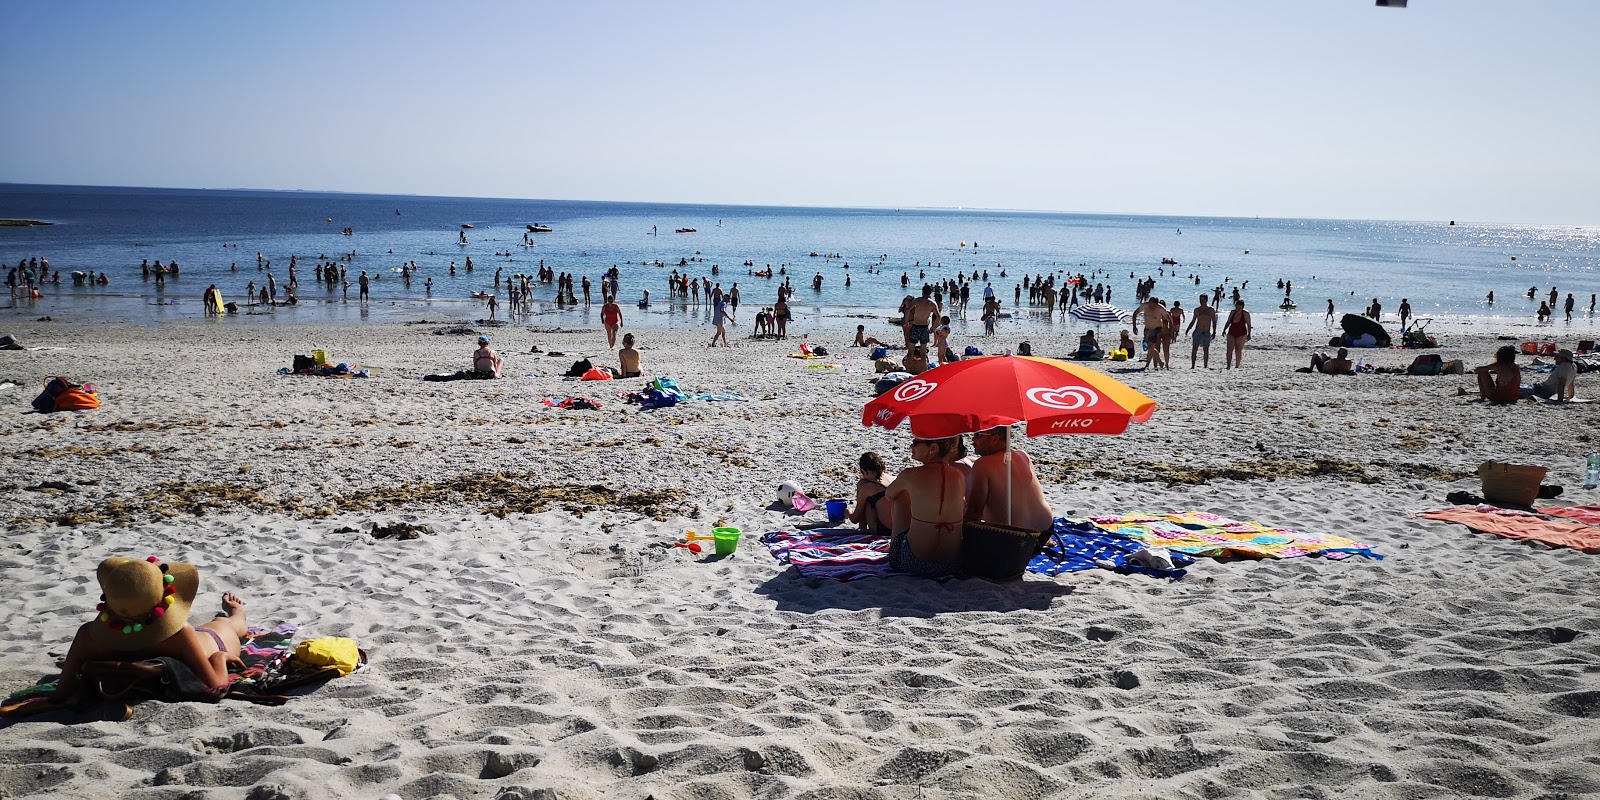 Foto de Plage de Saint-Jacques - lugar popular entre os apreciadores de relaxamento